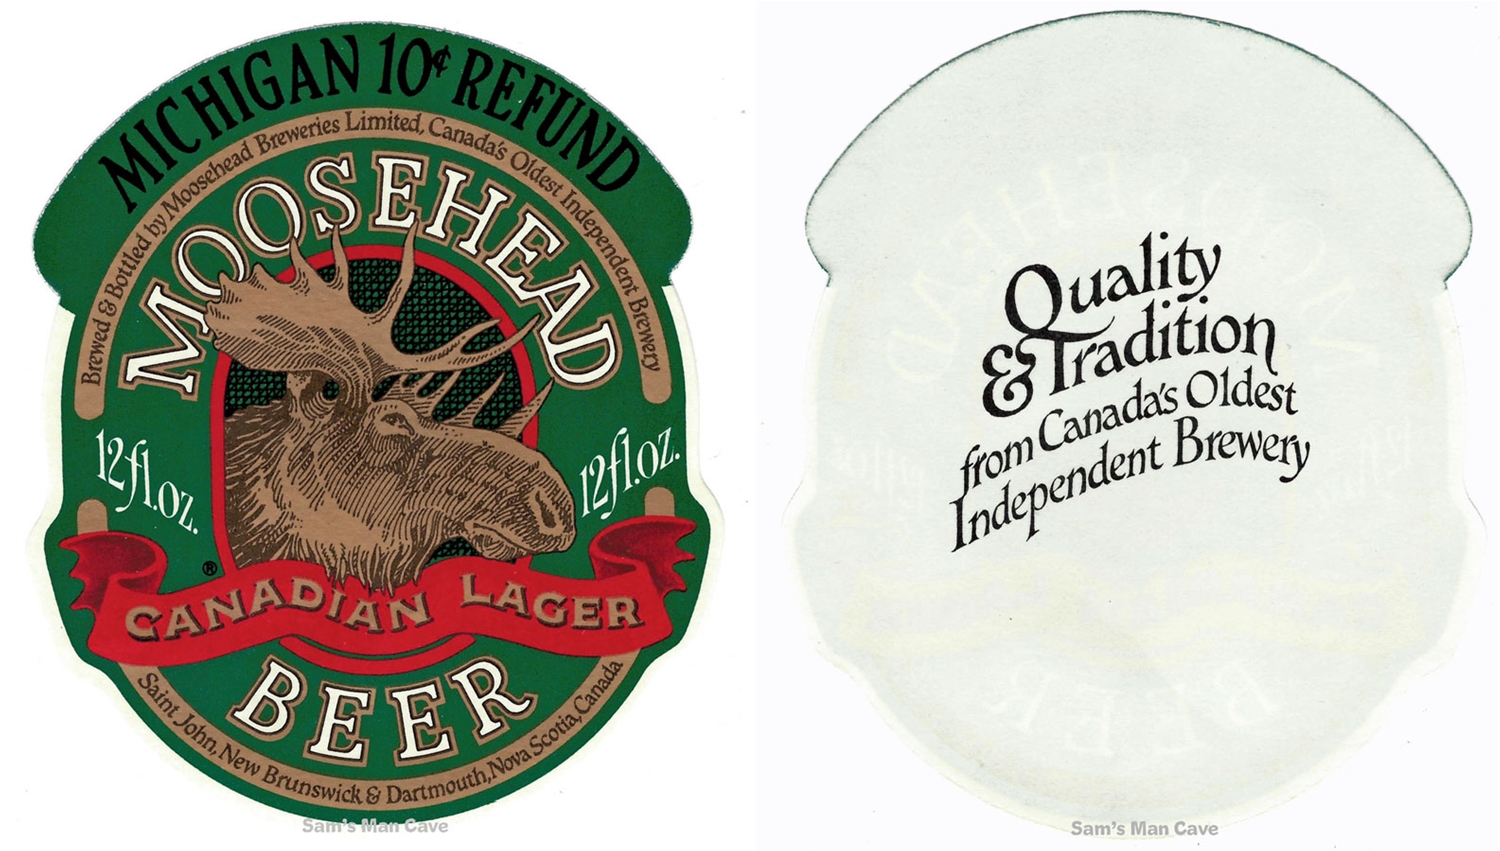 moosehead beer logo